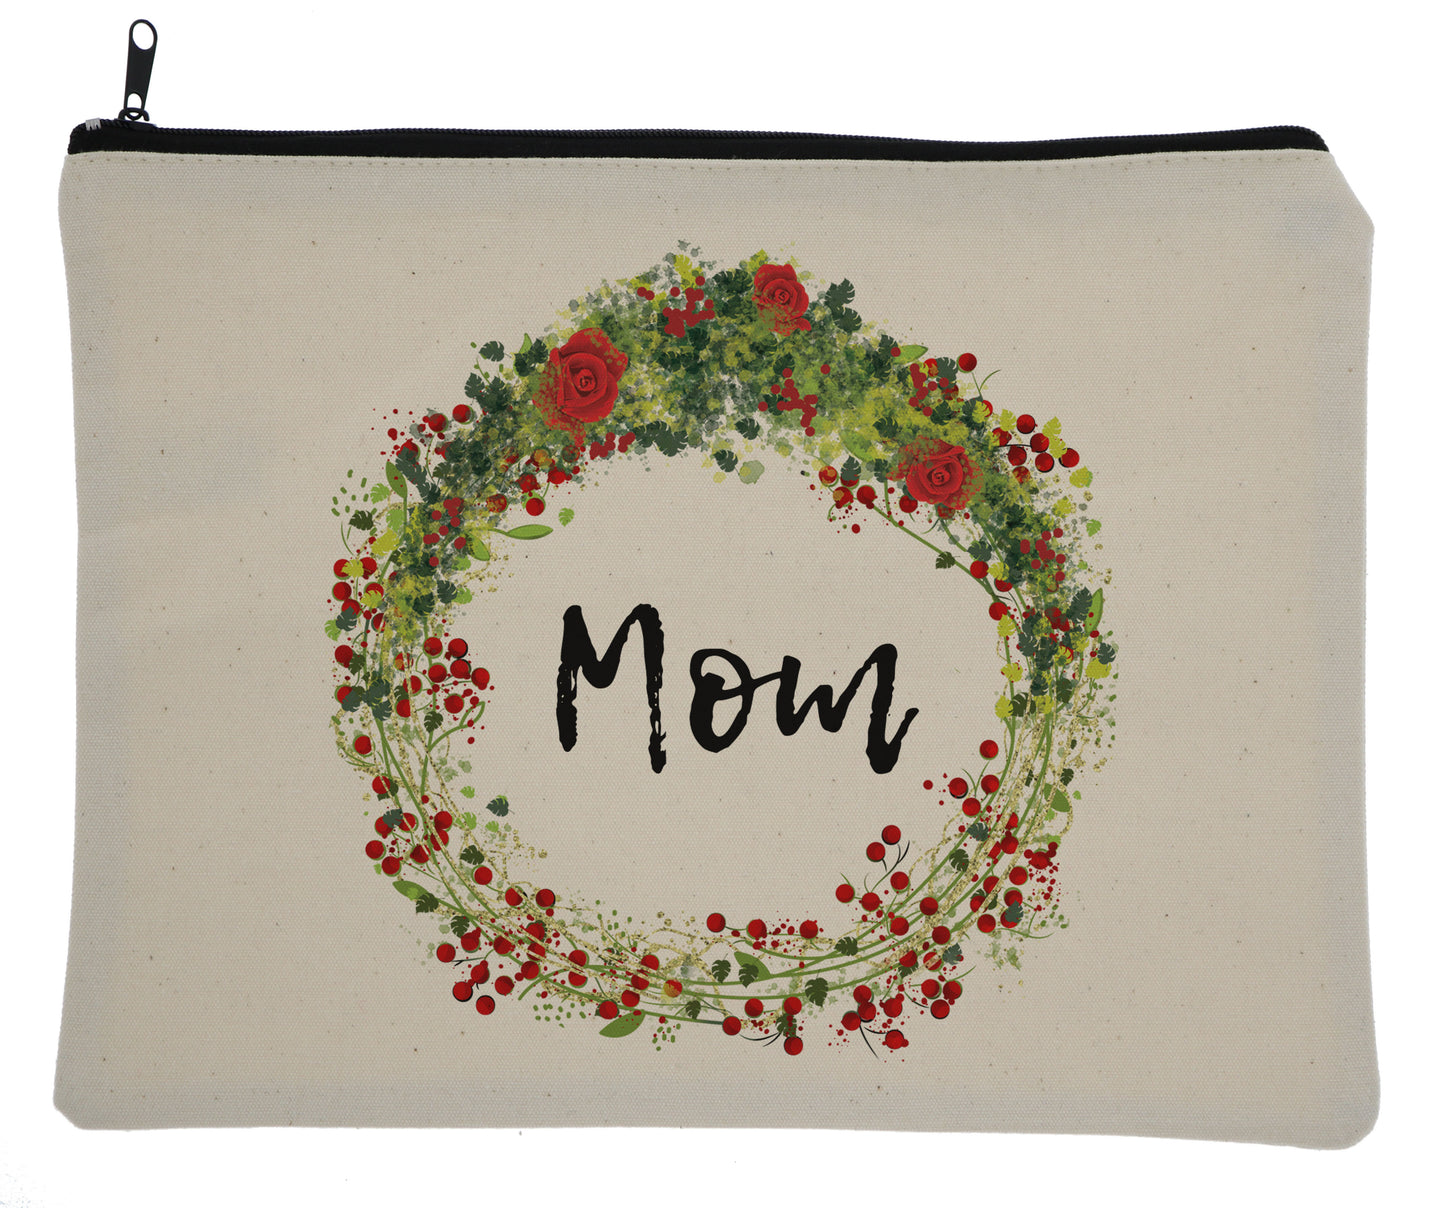 Winter Berry Bag - Momma, Bonus Mom, Step Mom, & Mom Available